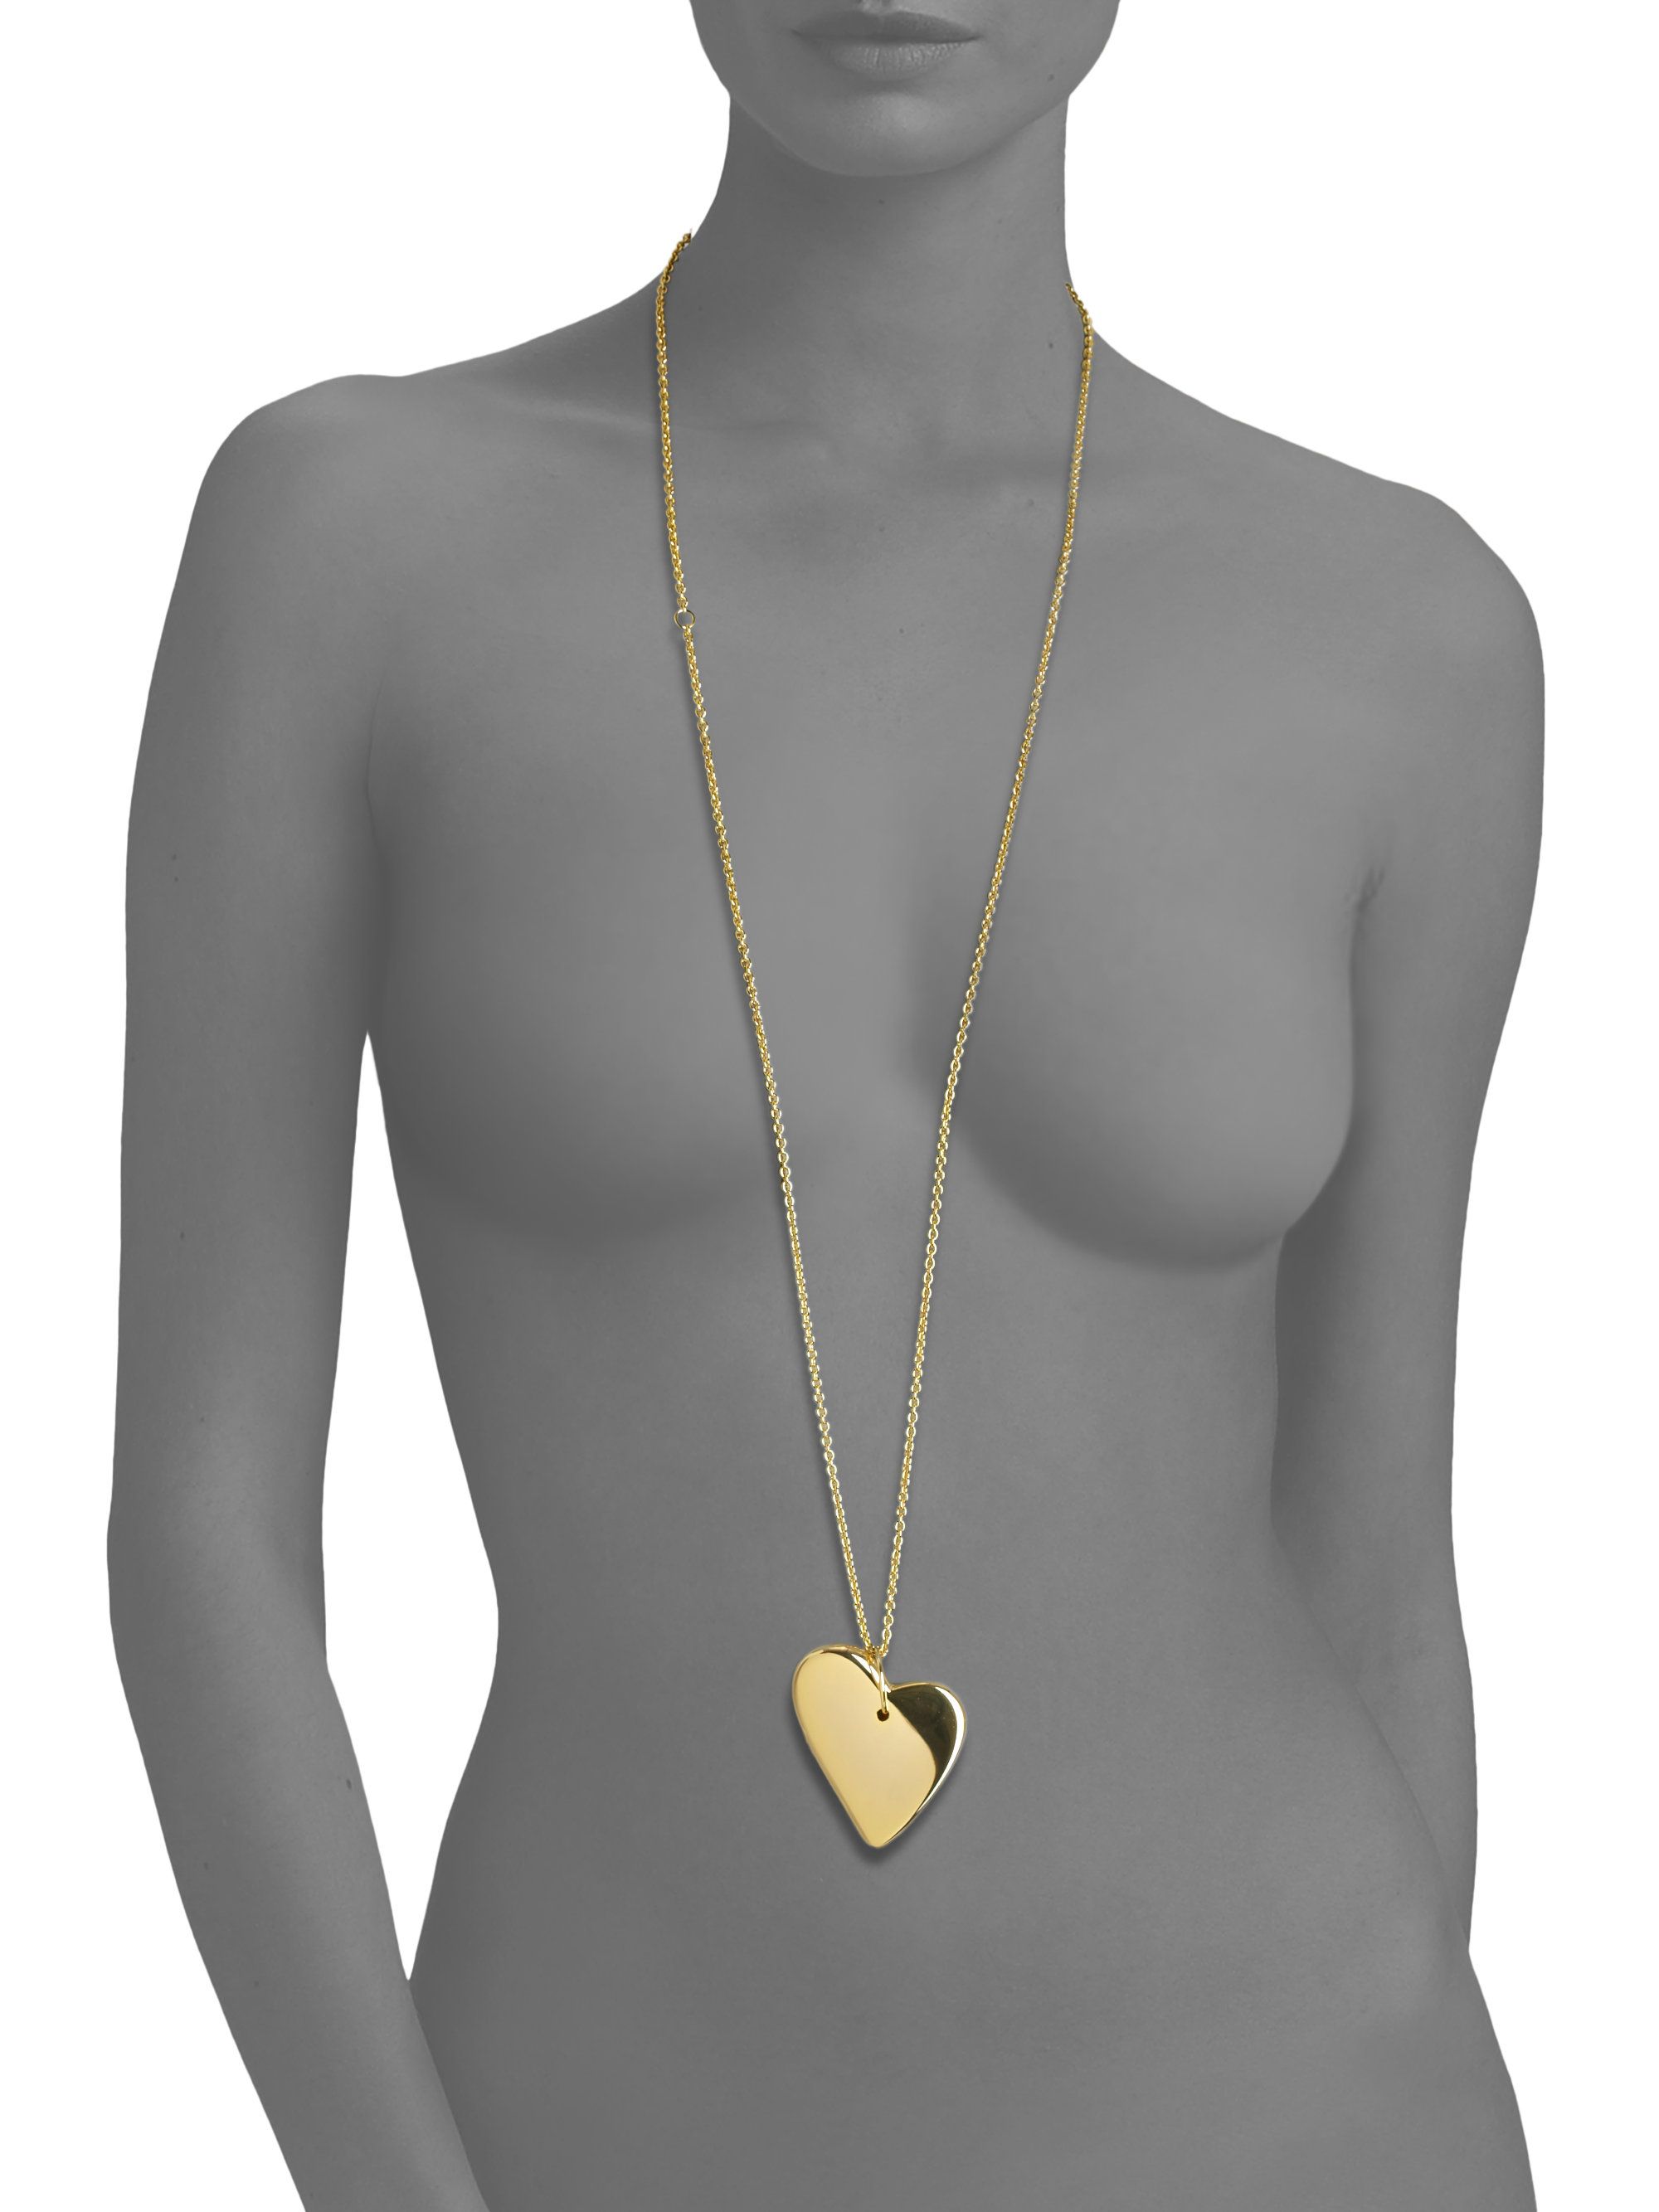 1arunoaerre Metallic Asymmetrical Heart Pendant Necklace With Newest Asymmetrical Heart Necklaces (View 22 of 25)